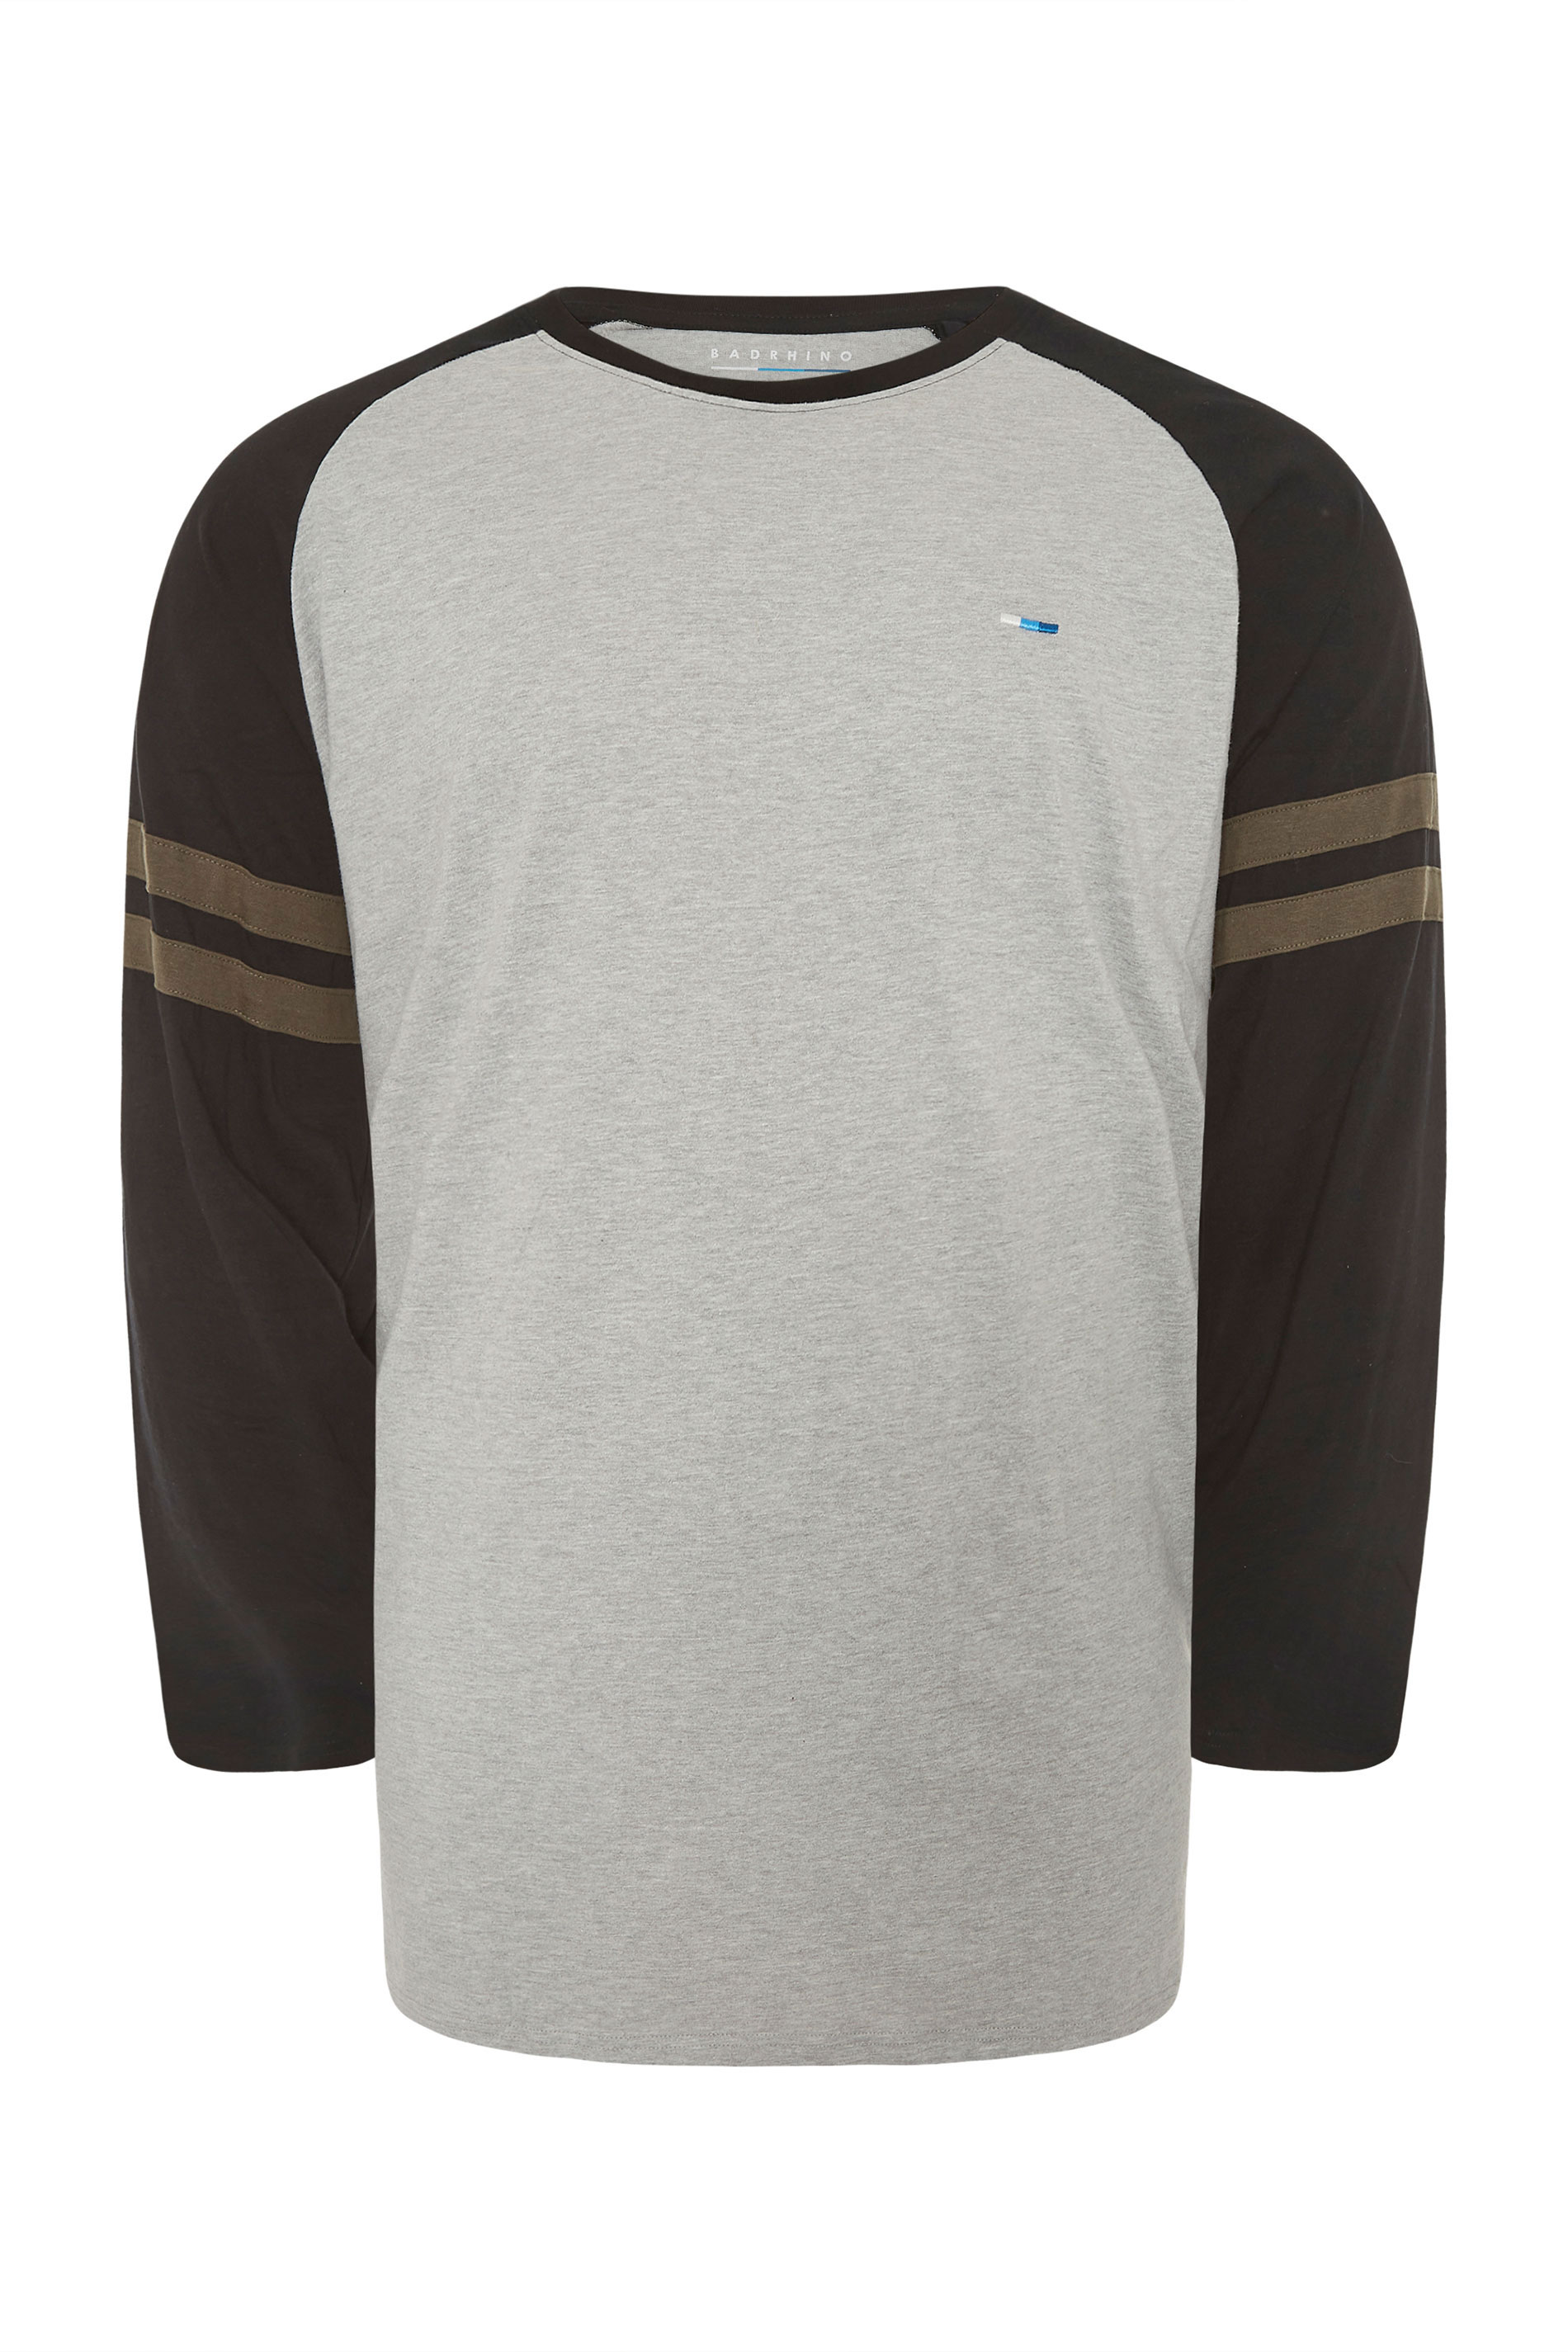 BadRhino Grey Marl Long Sleeve Stripe T-Shirt | BadRhino 2